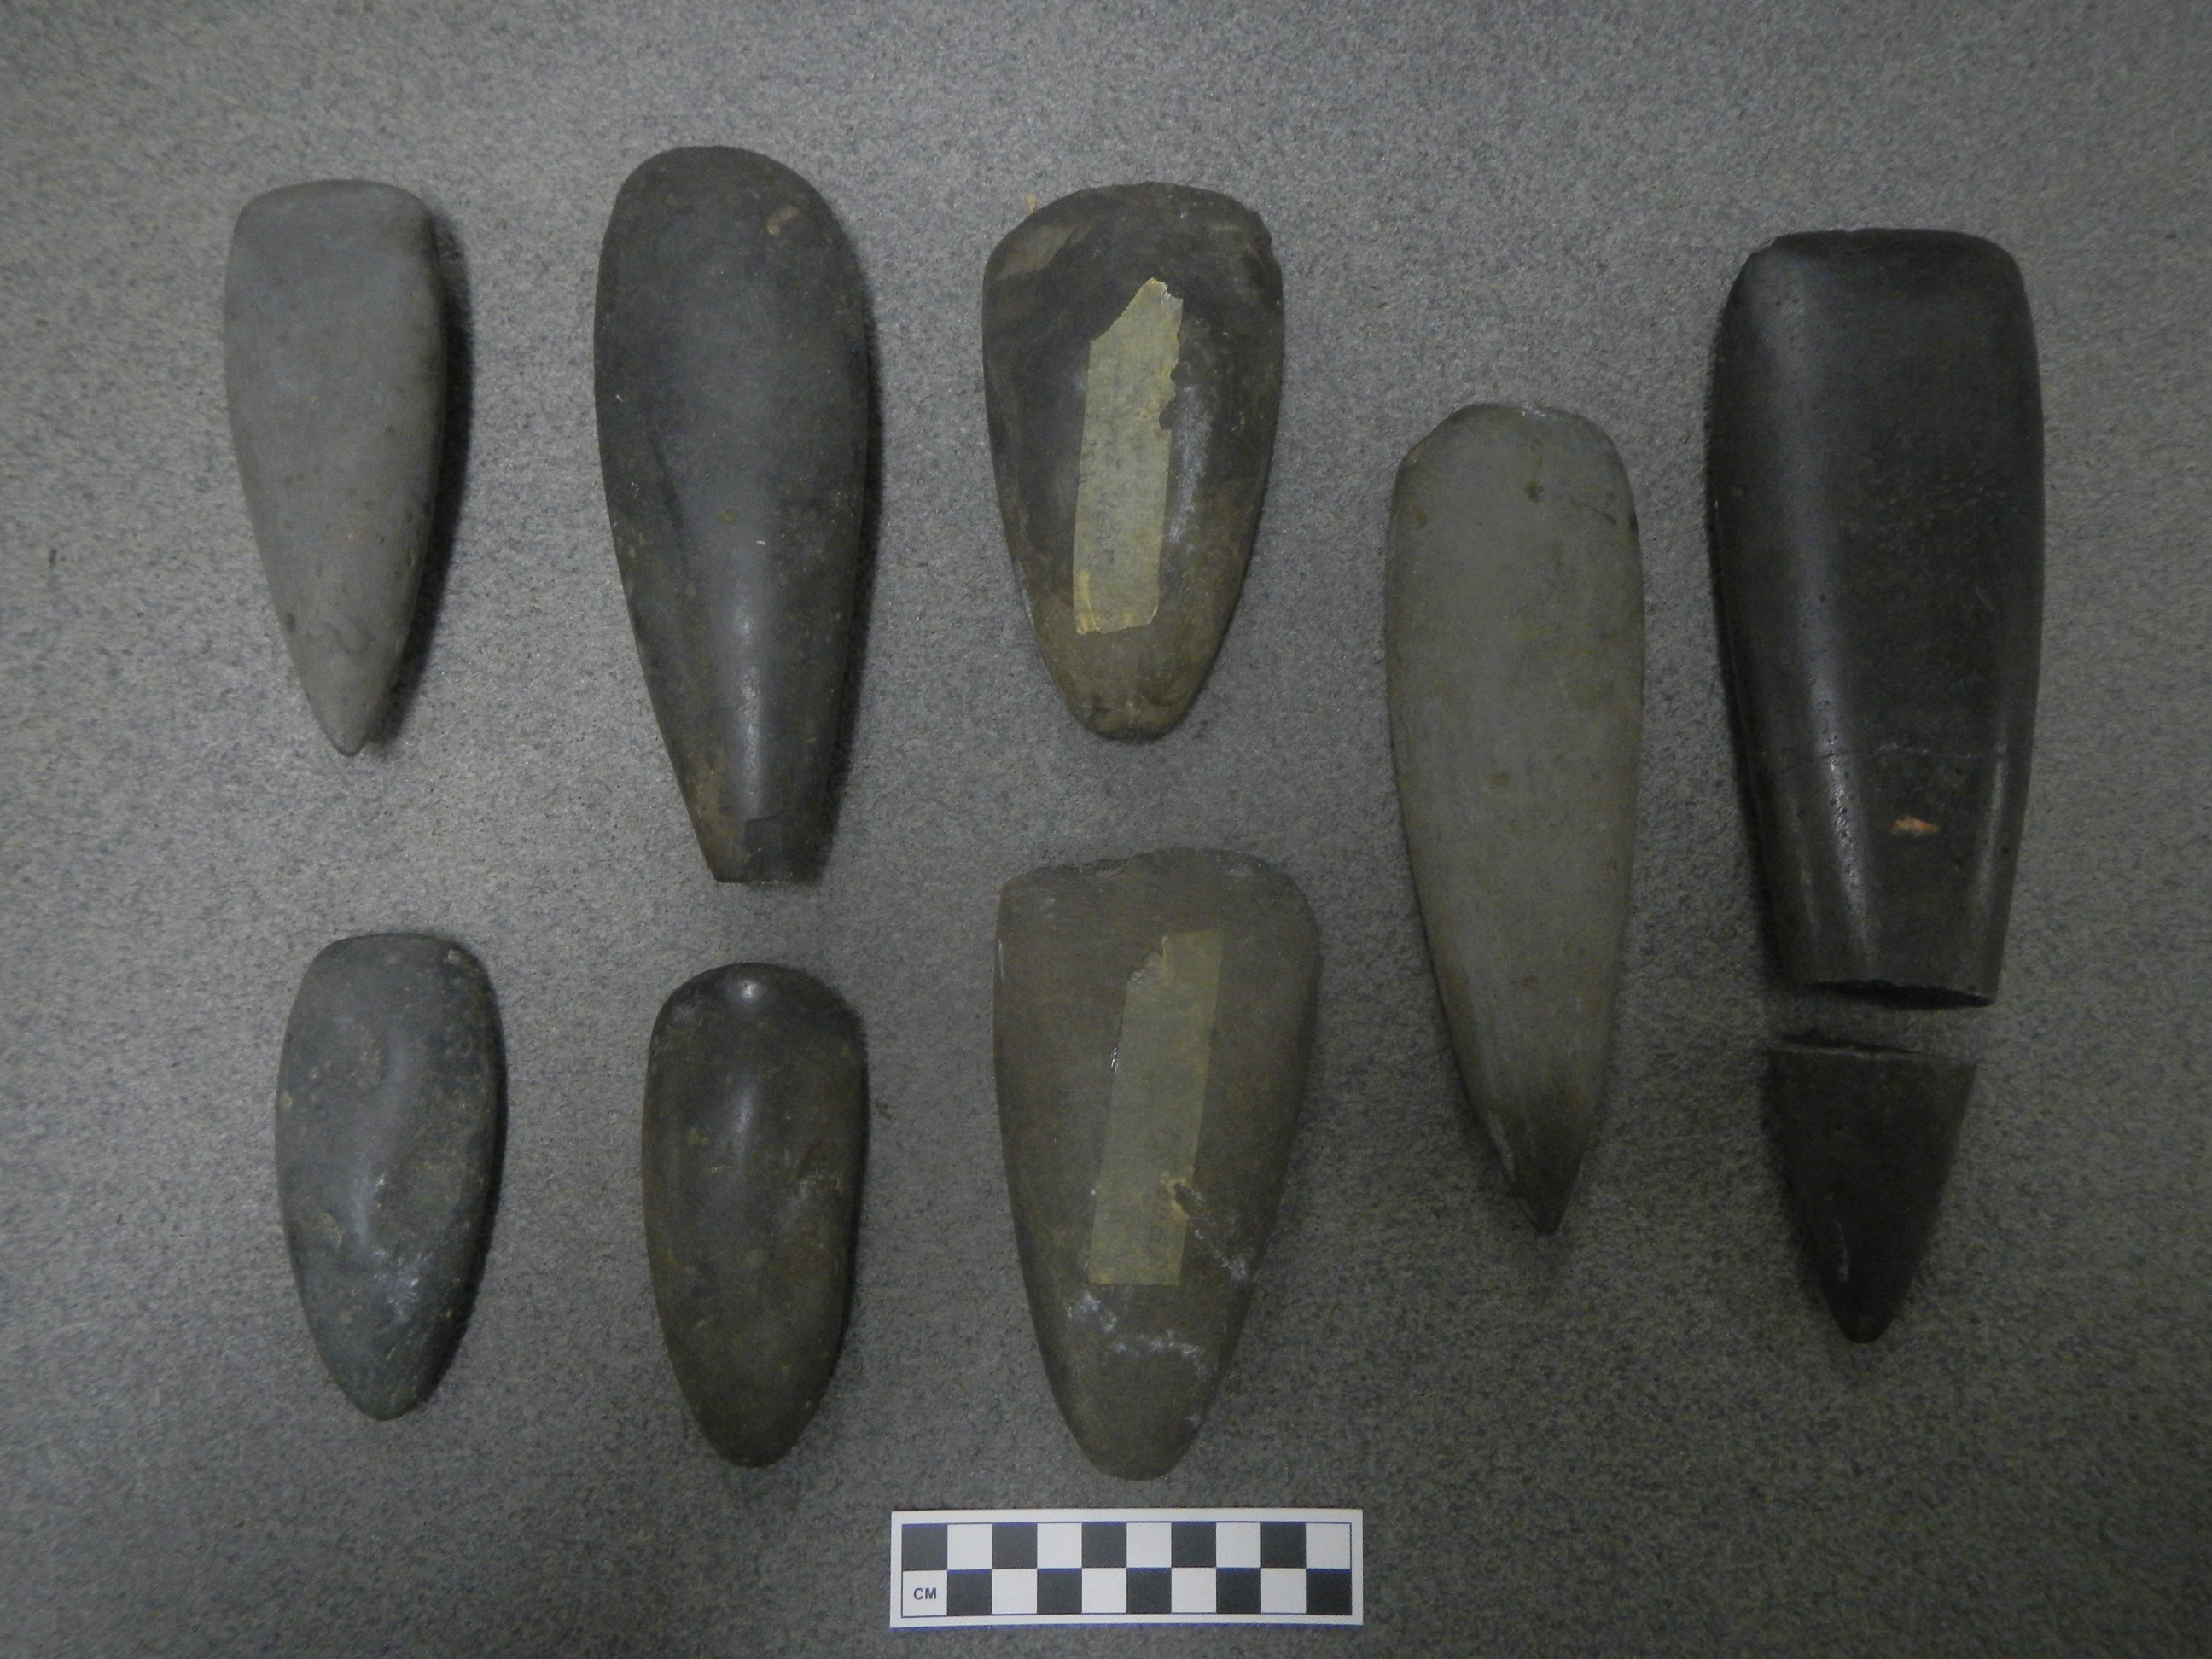 Adze blades from southern vanuatu, geddie robertson collection, nova scotia museum (courtesy of j. flexner)